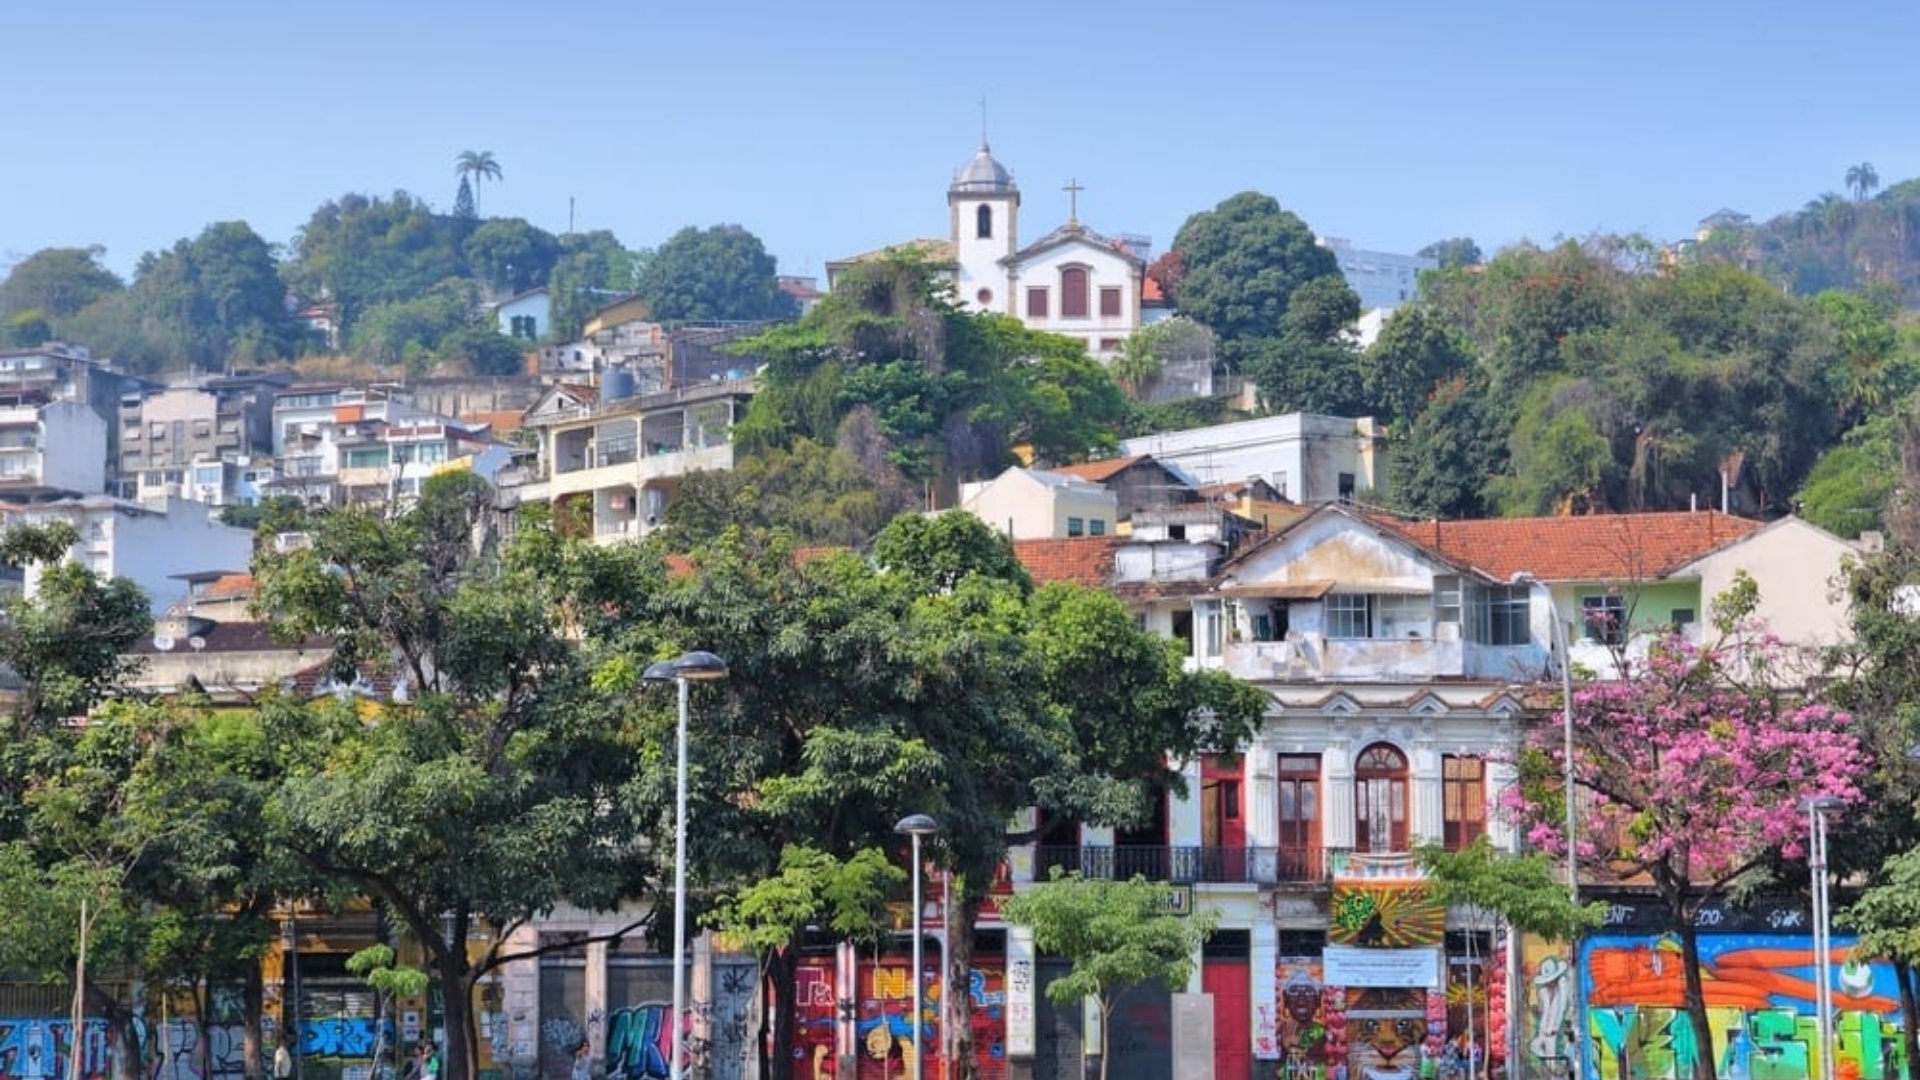 The Santa Teresa neighbourhood of Rio, Brazil